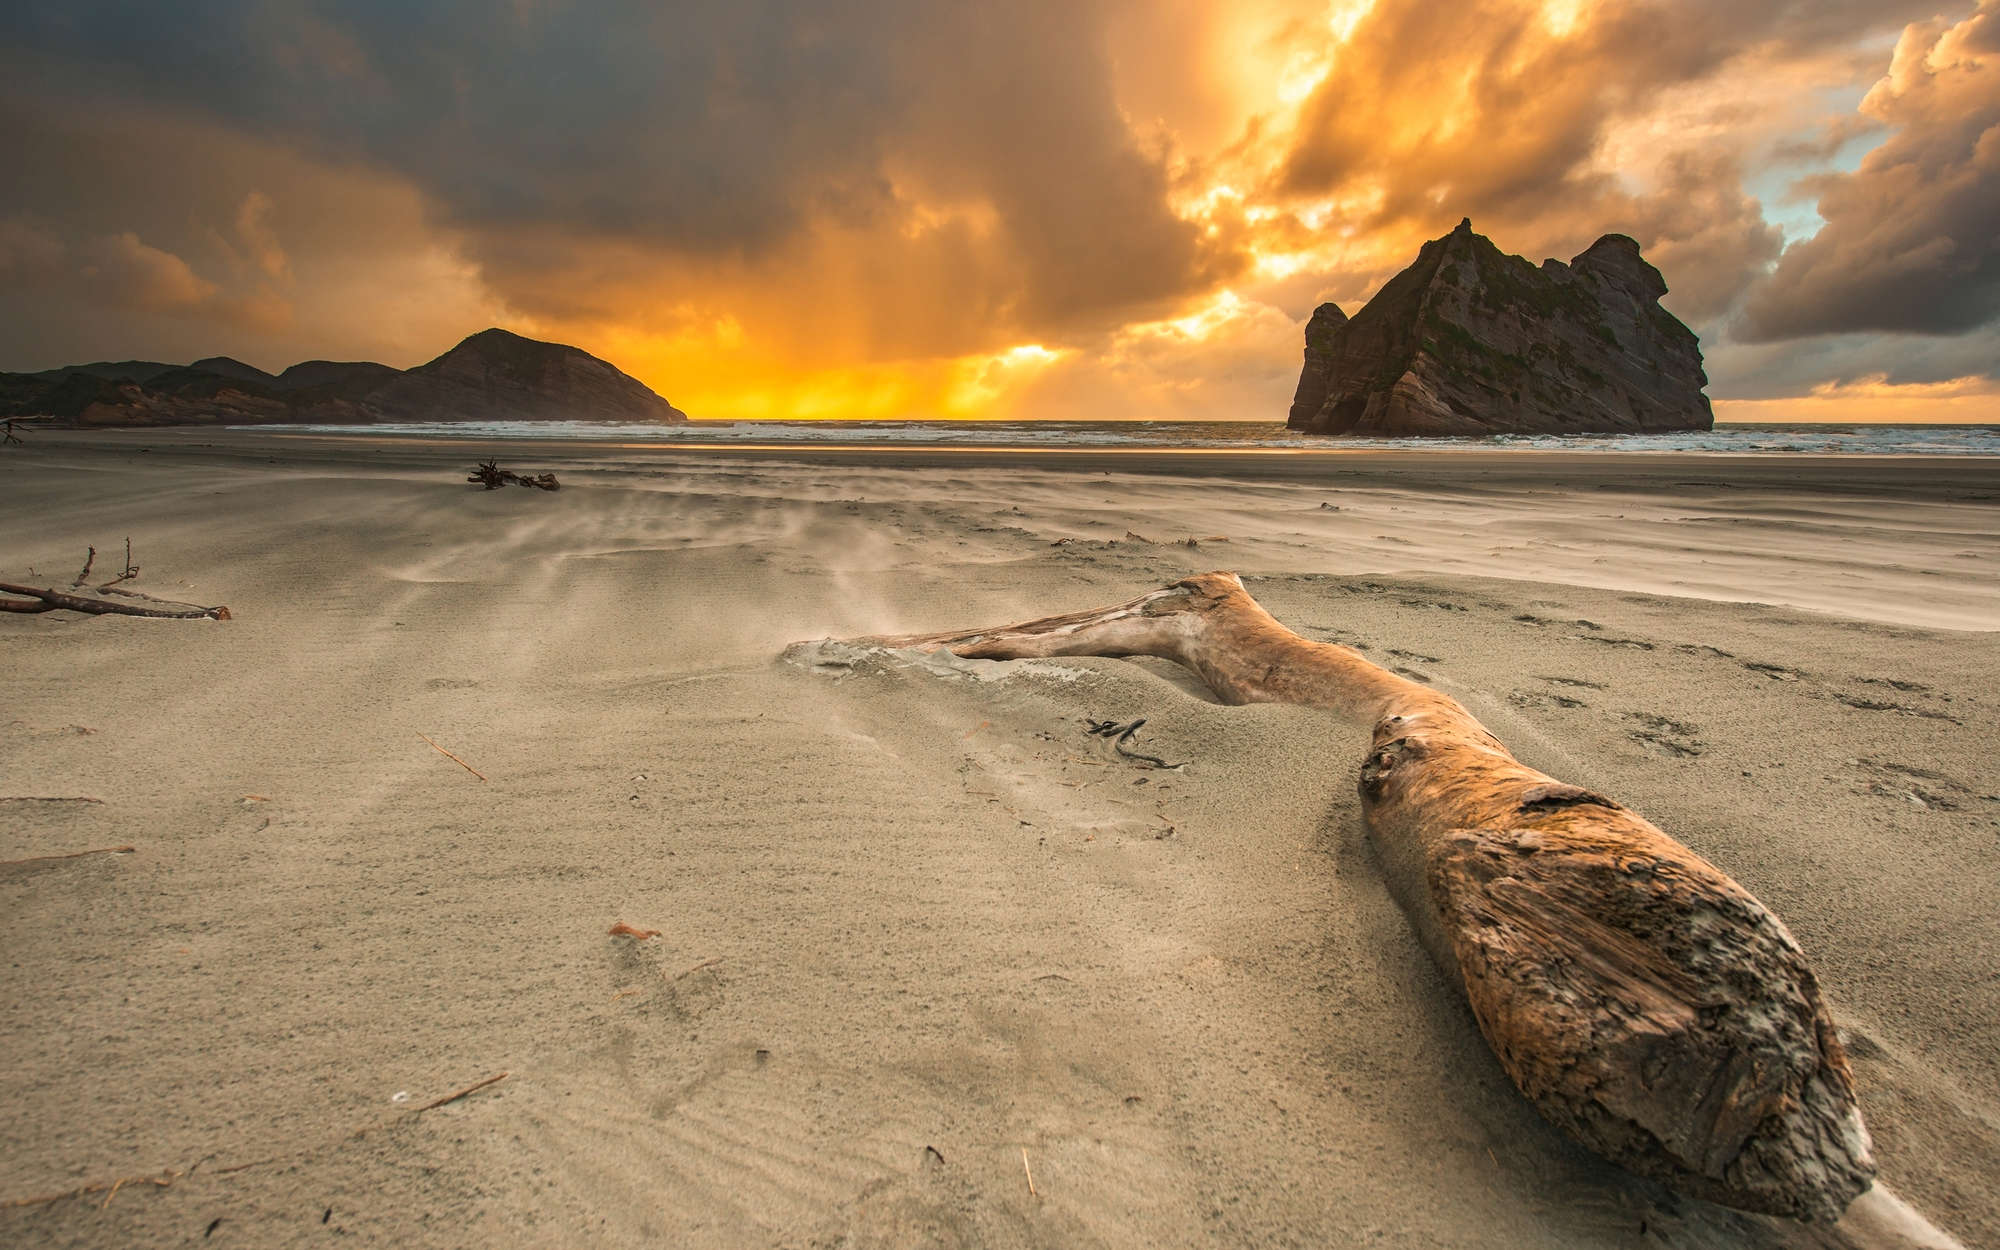             Fototapete Strand in Neuseeland – Premium Glattvlies
        